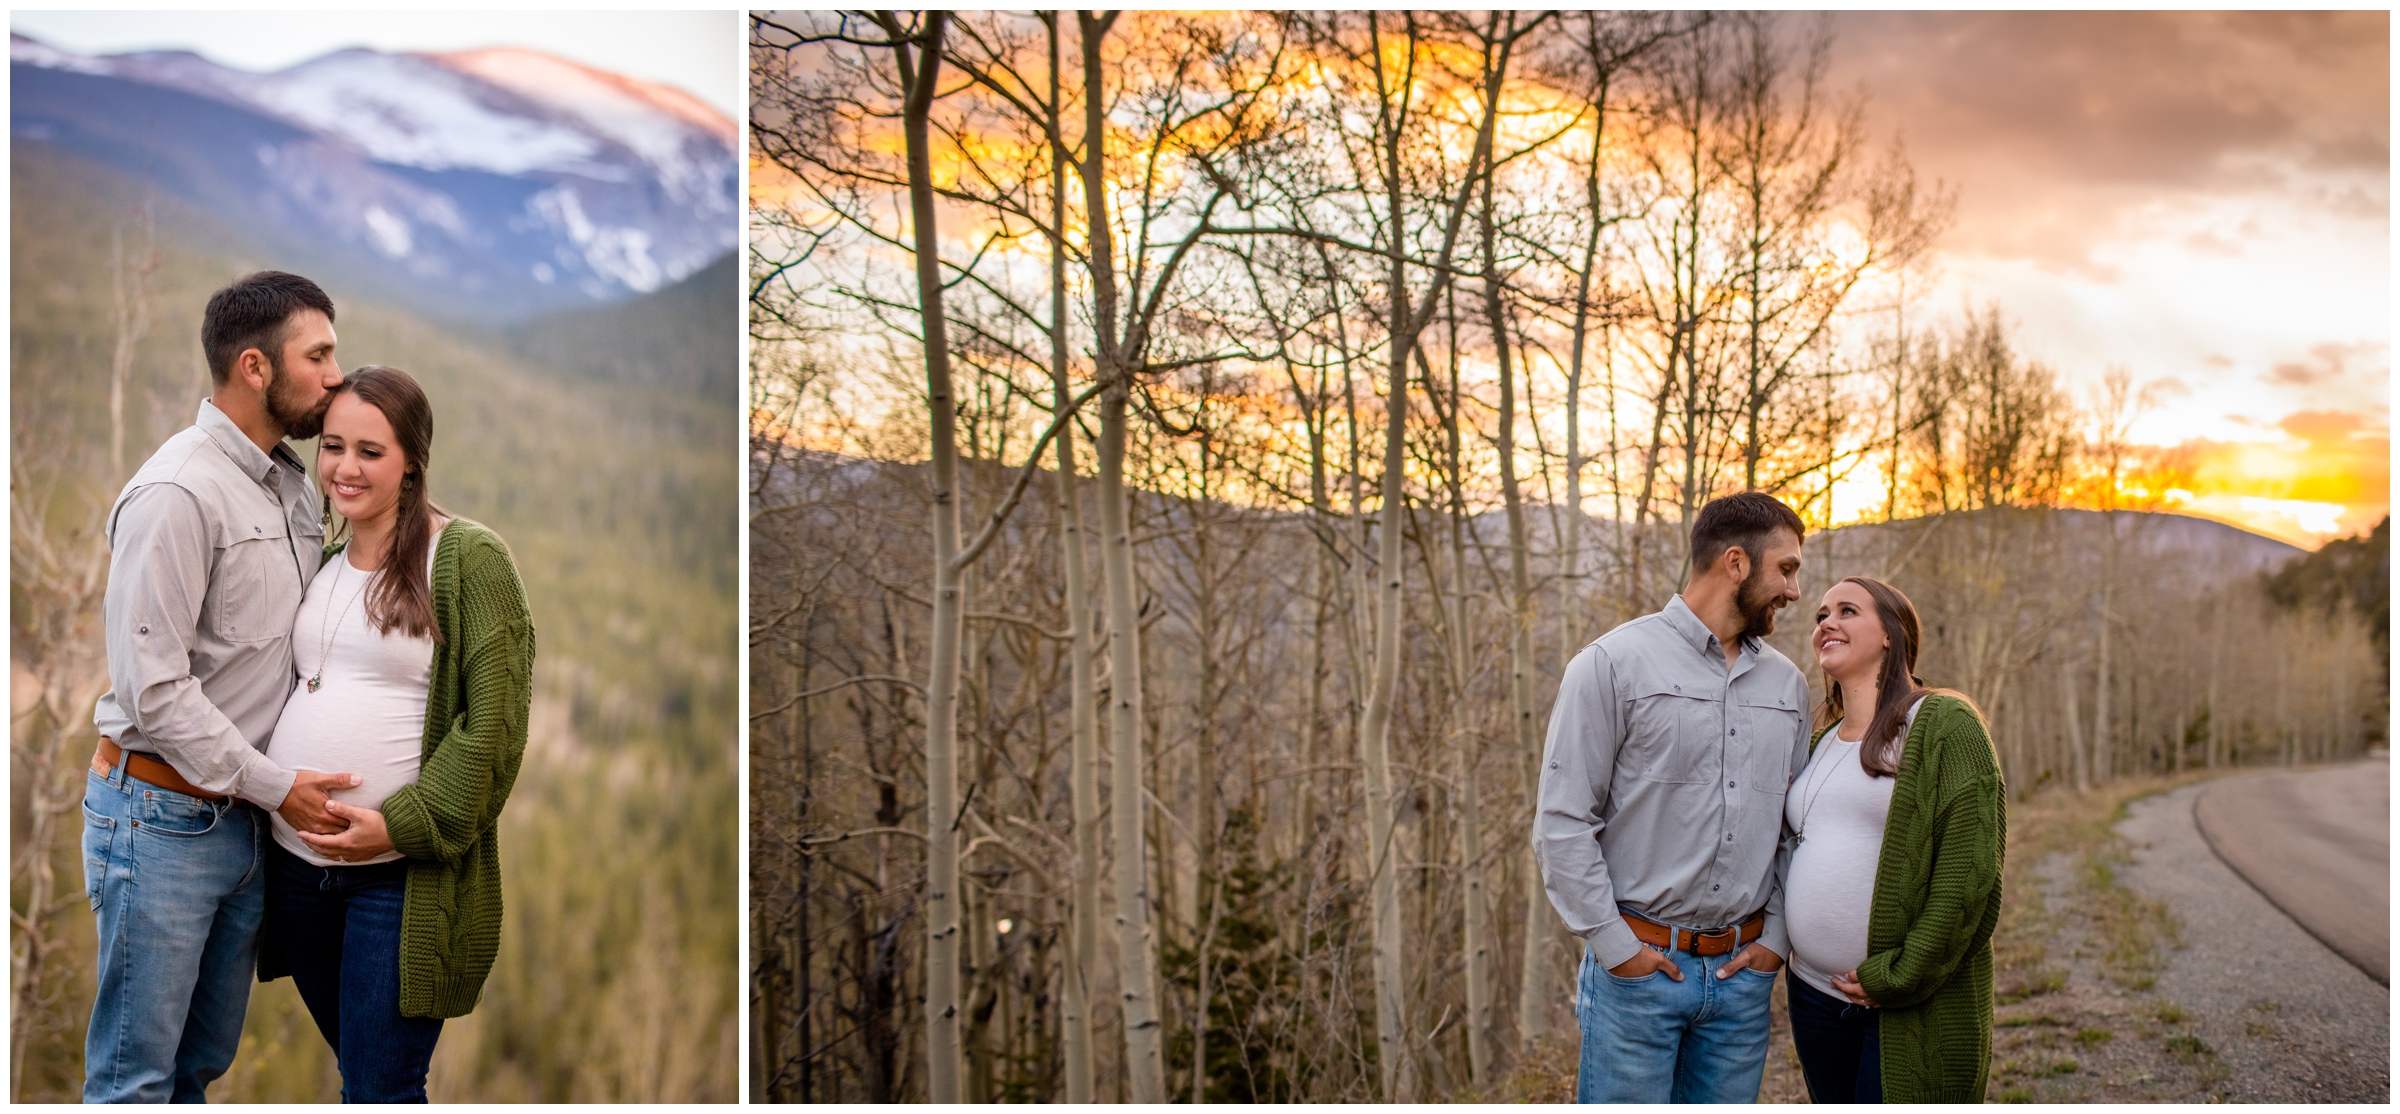 Sunset maternity photography inspiration in Idaho springs Colorado 